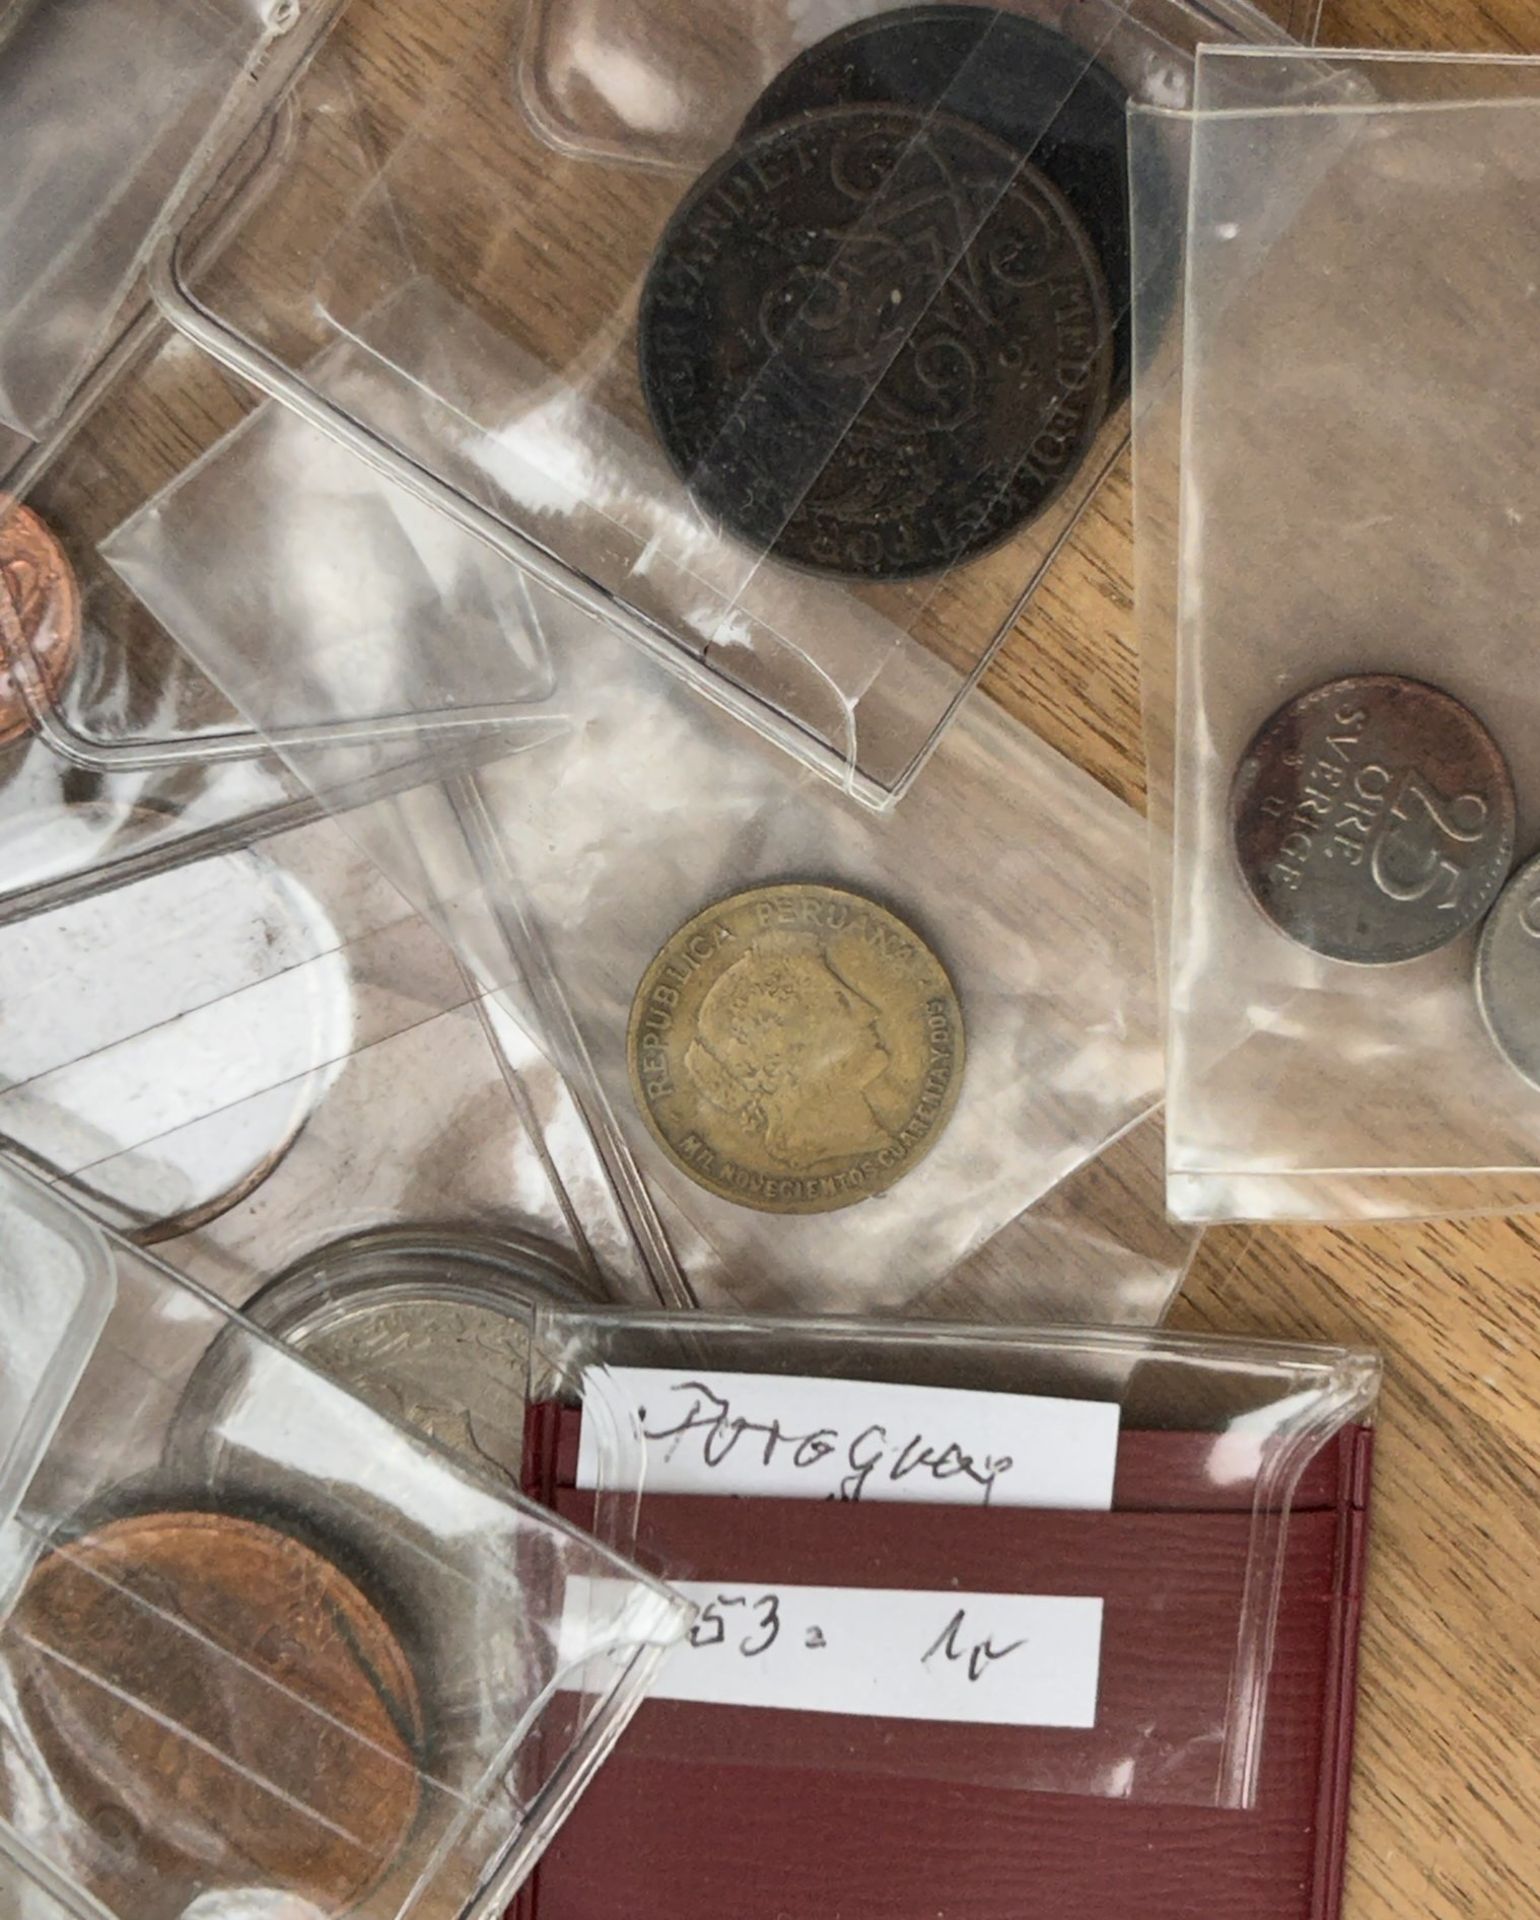 ca. 60 div. Münzen, hpts. in Tüten, unsortiert, ungeprüft - Image 8 of 11